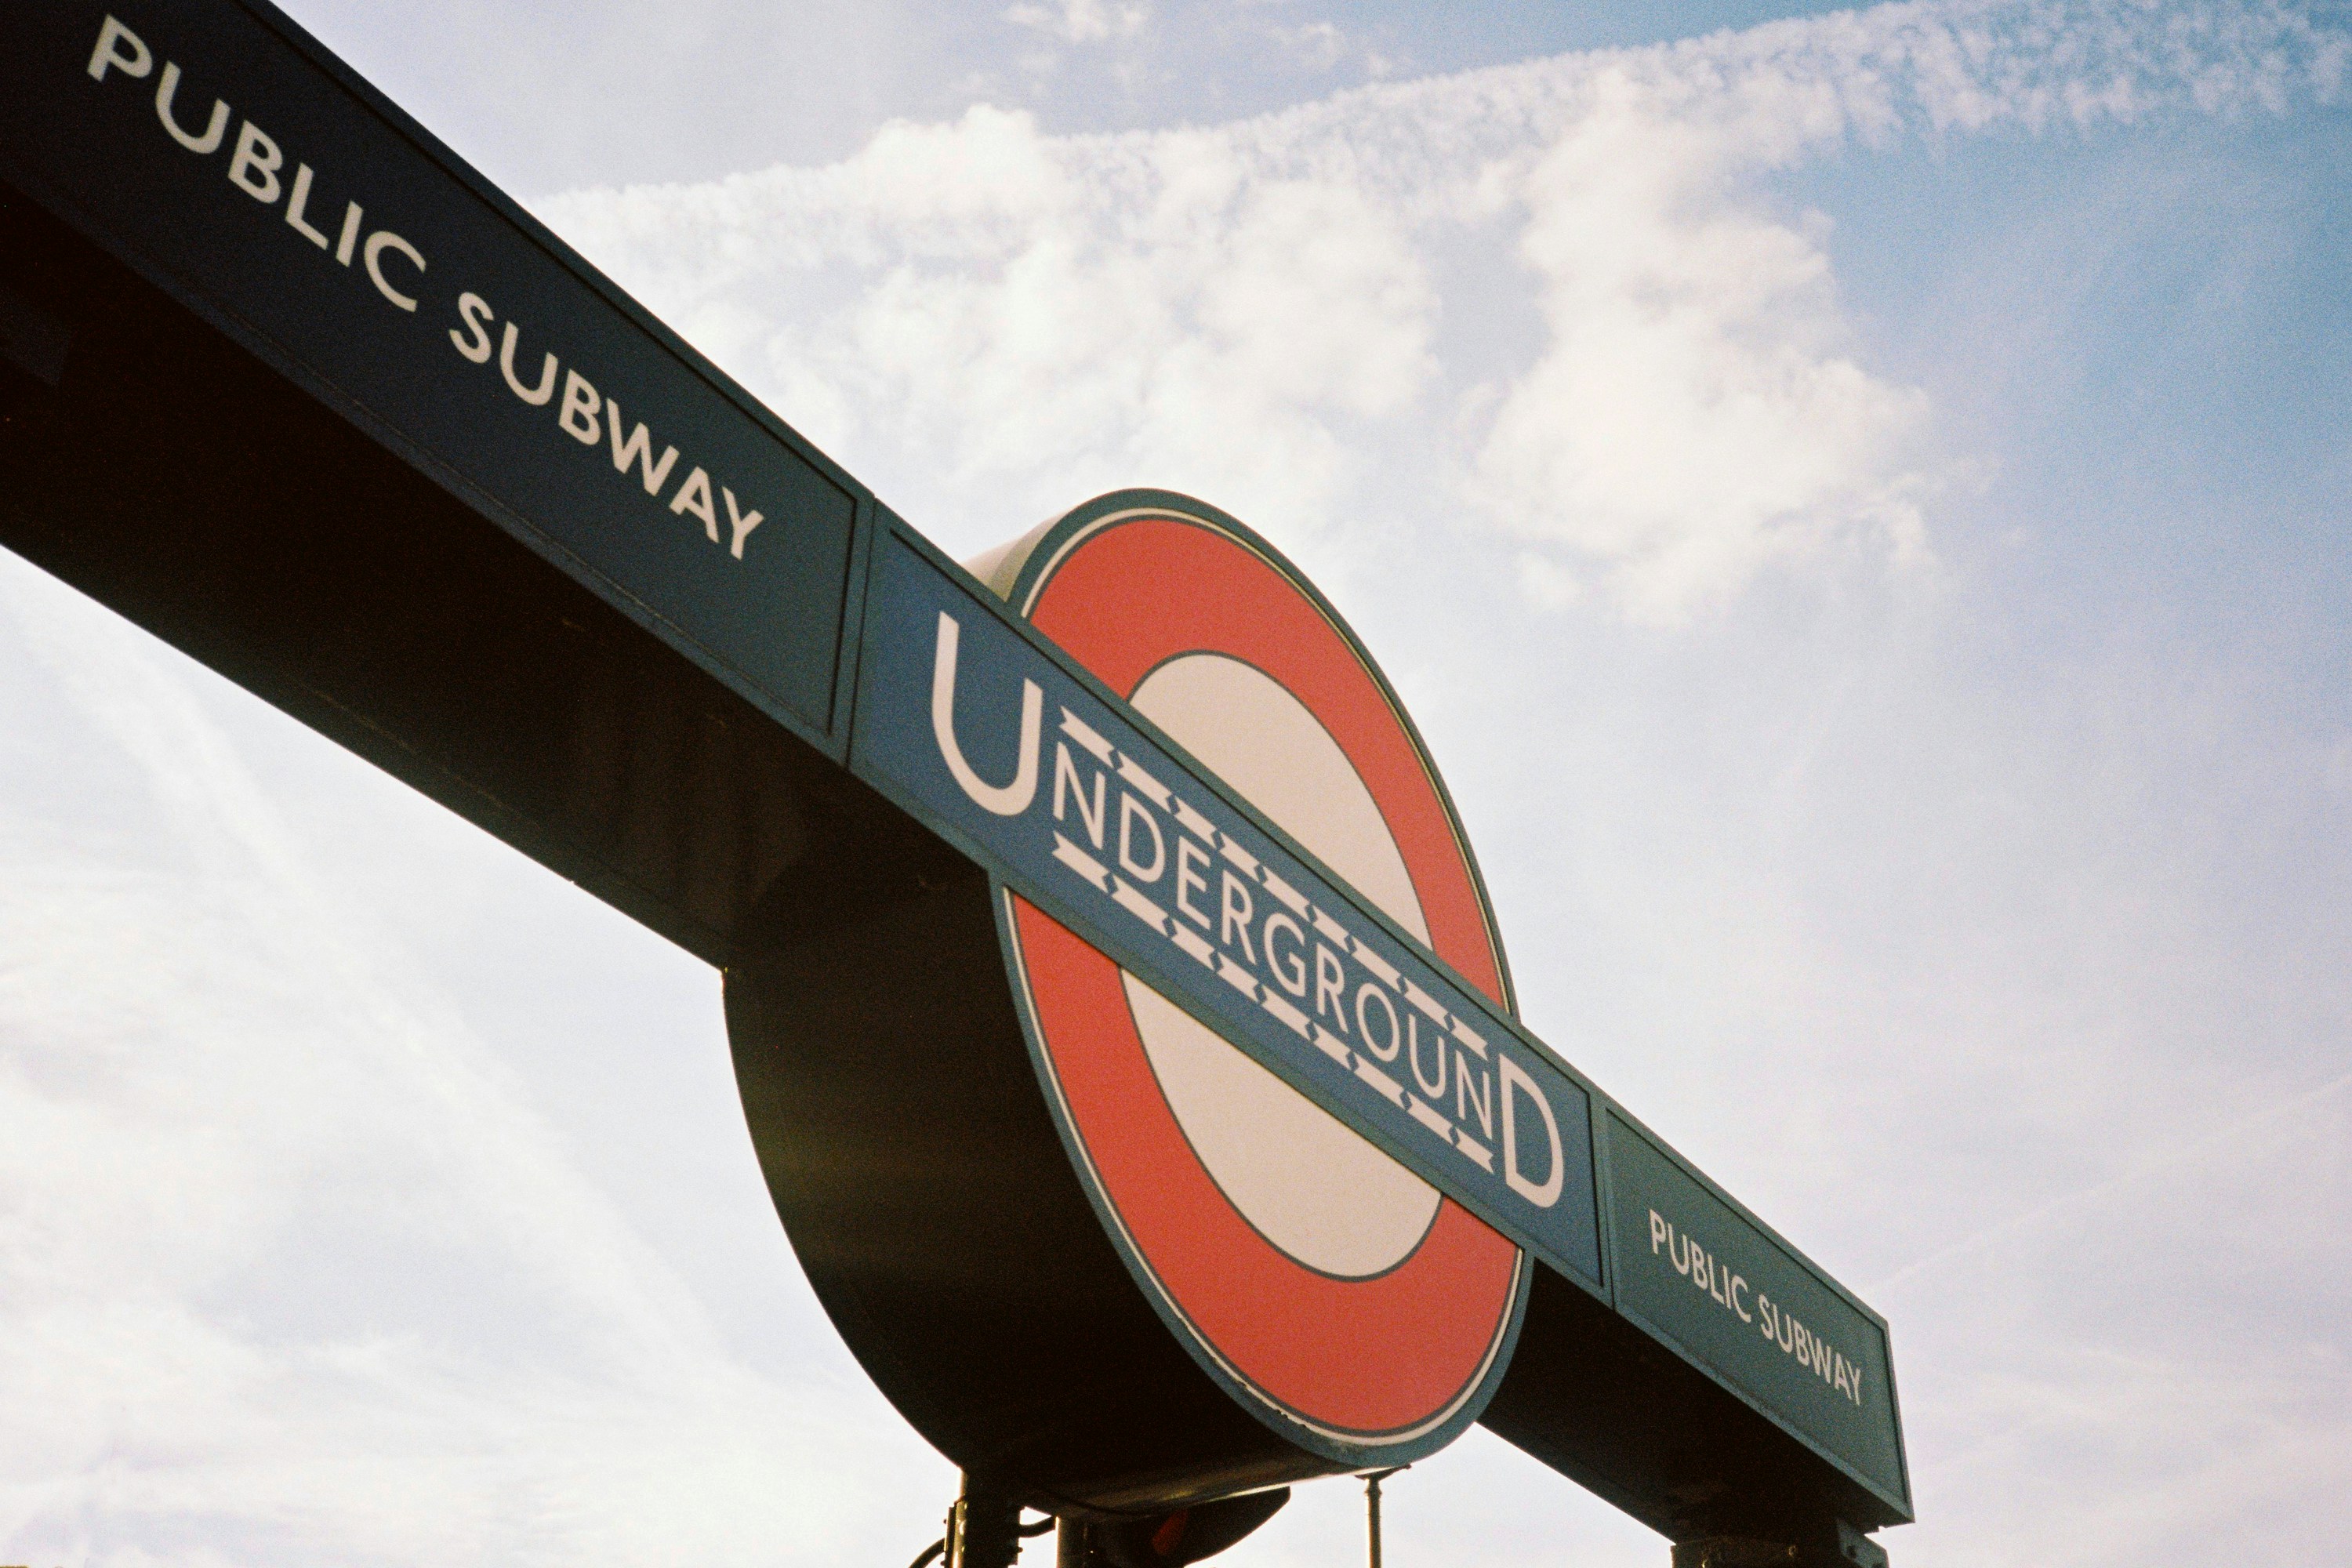 A London Underground Public Subway sign in London, England. Shot on film.